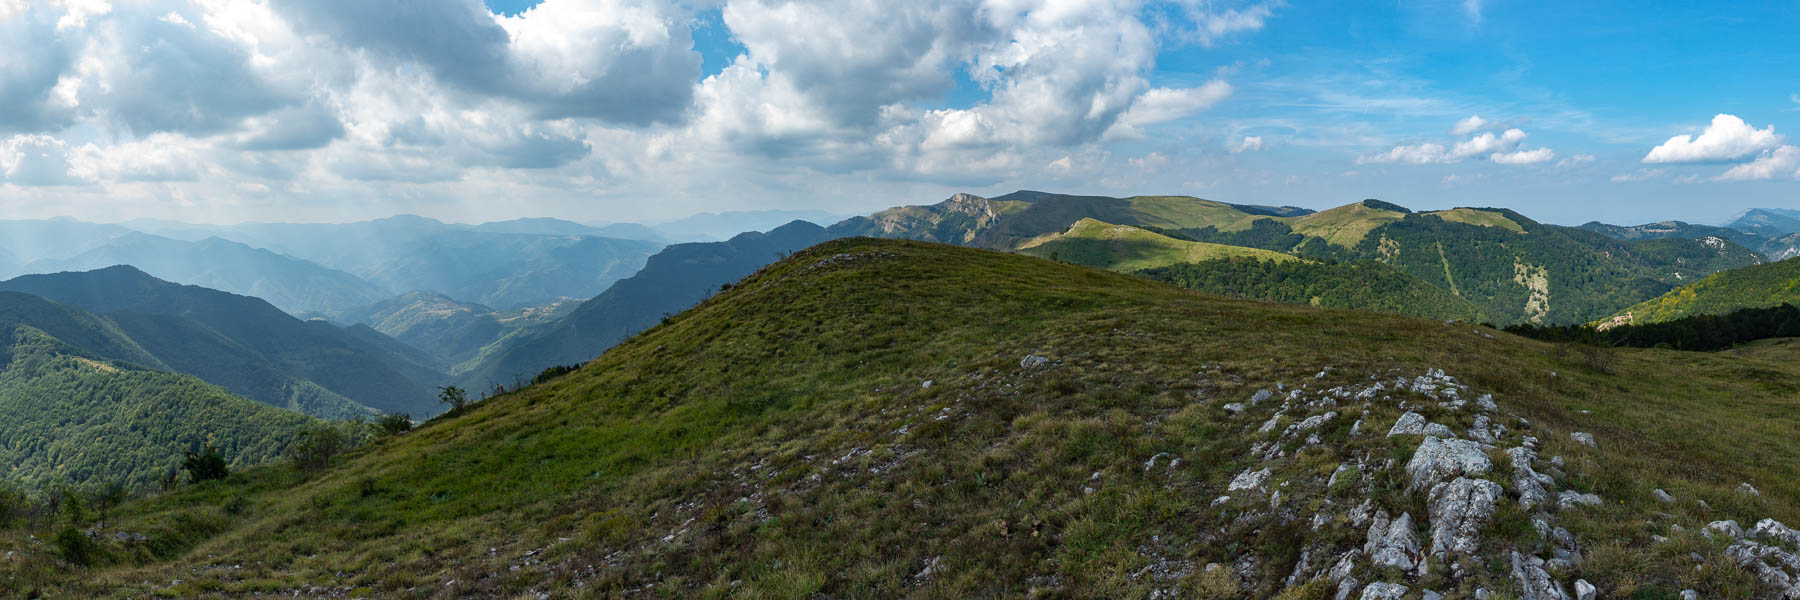 Sommet du massif de Vratsa : Beglichka Mogila, 1481 m